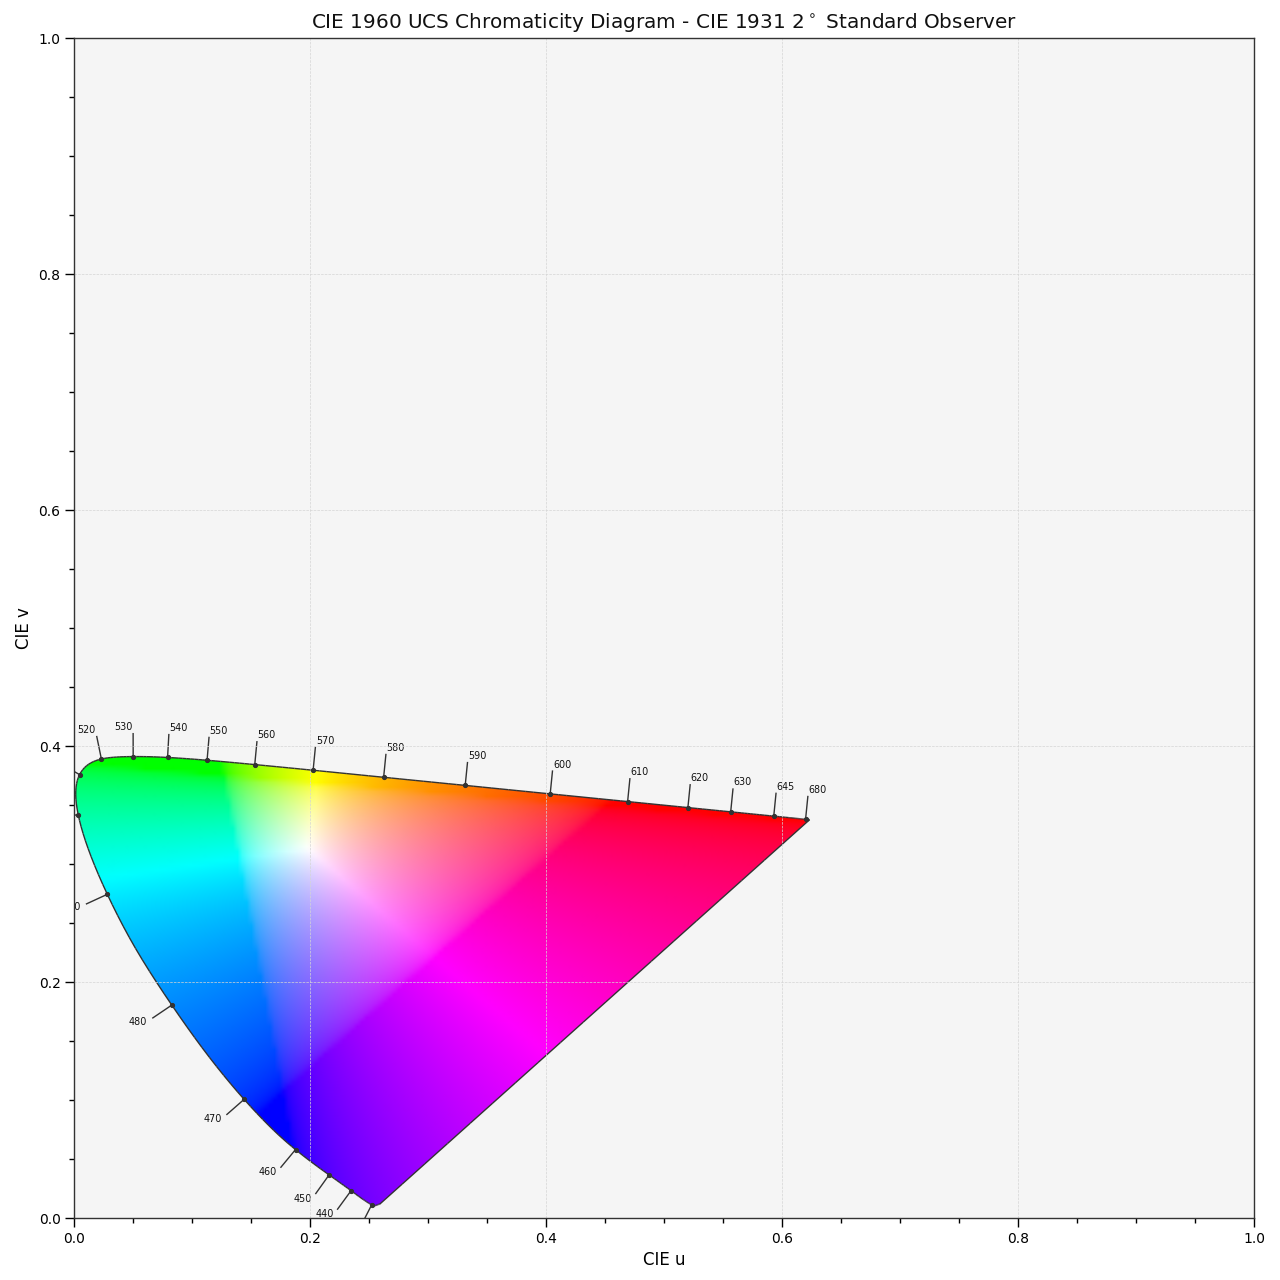 plot_chromaticity_diagram_CIE1960UCS